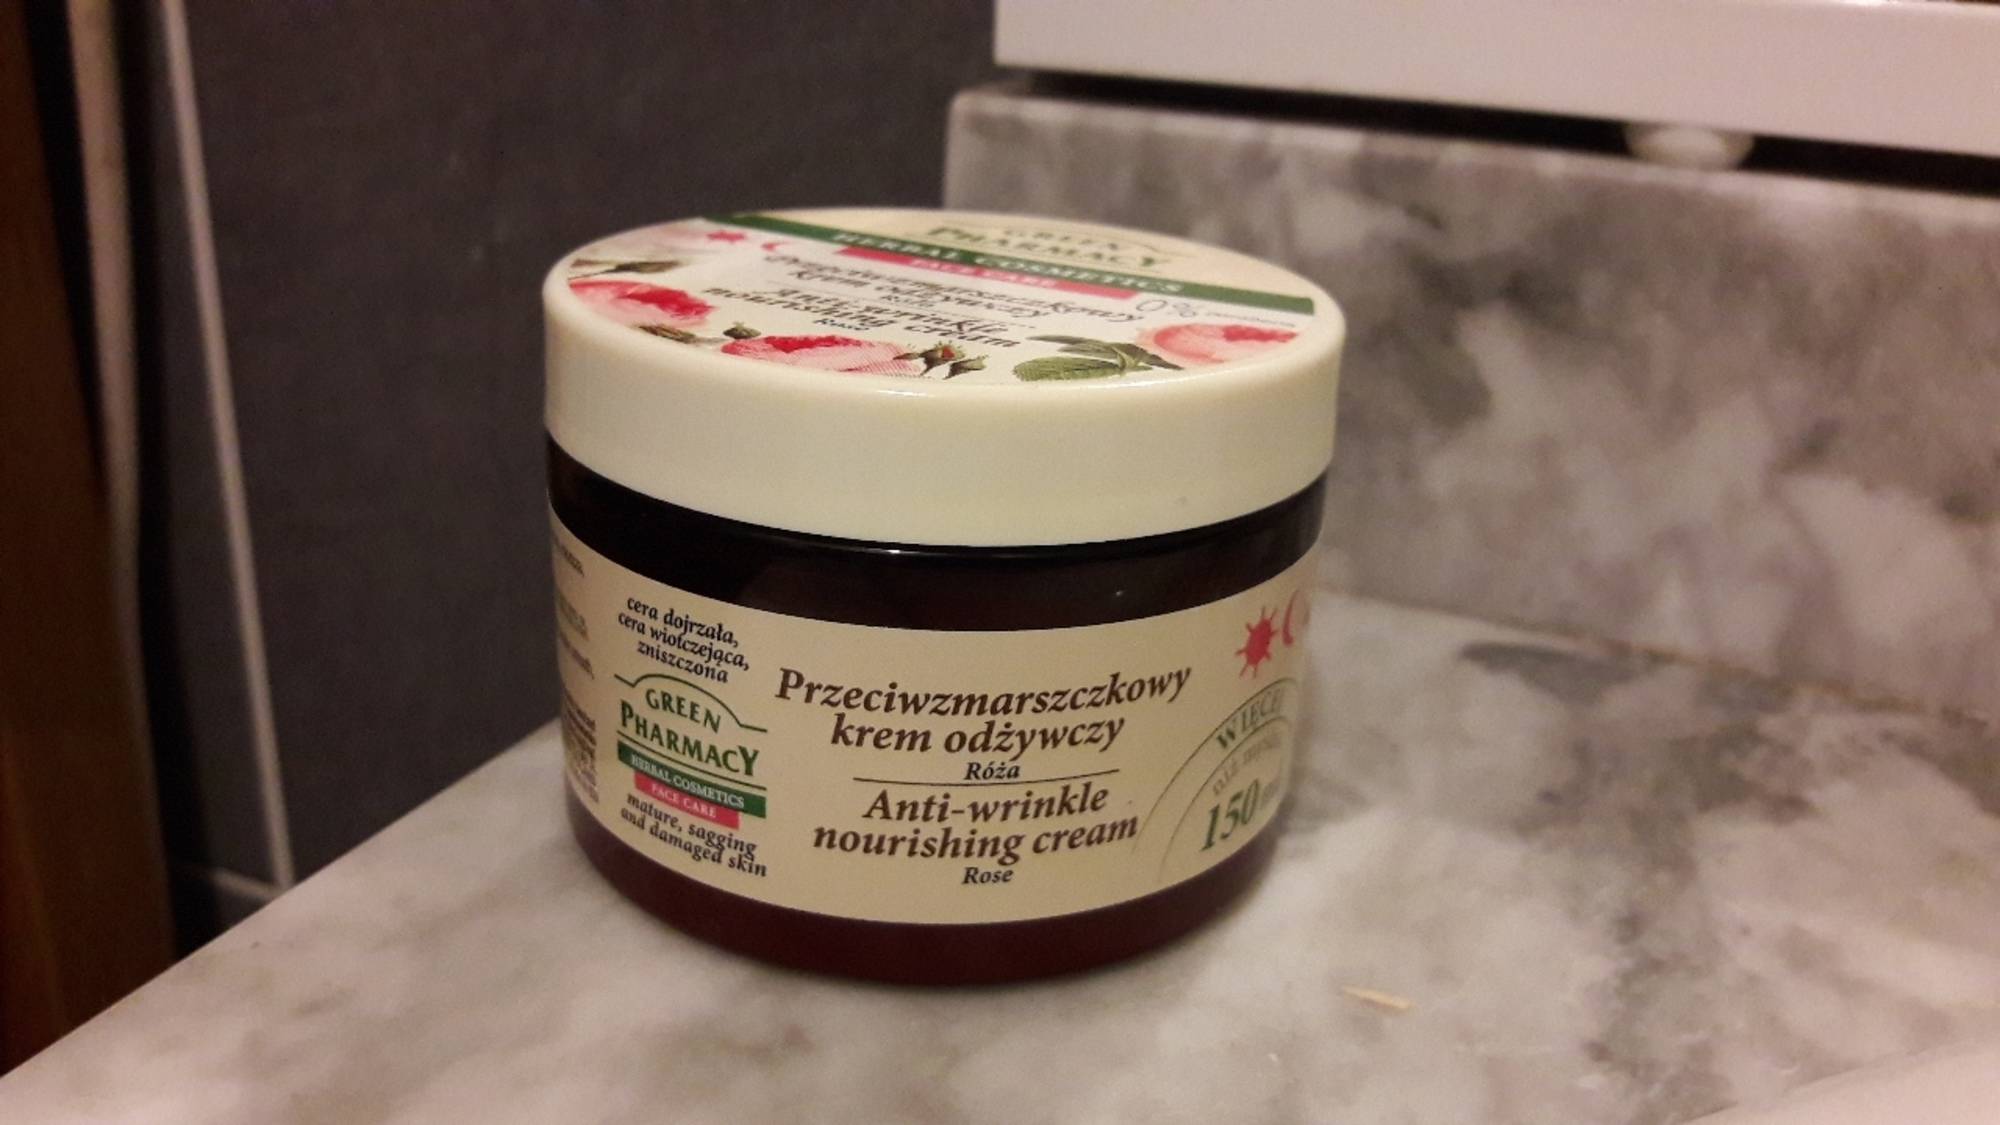 THE GREEN PHARMACY - Herbal cosmetics - Anti-wrinkle nourishing cream